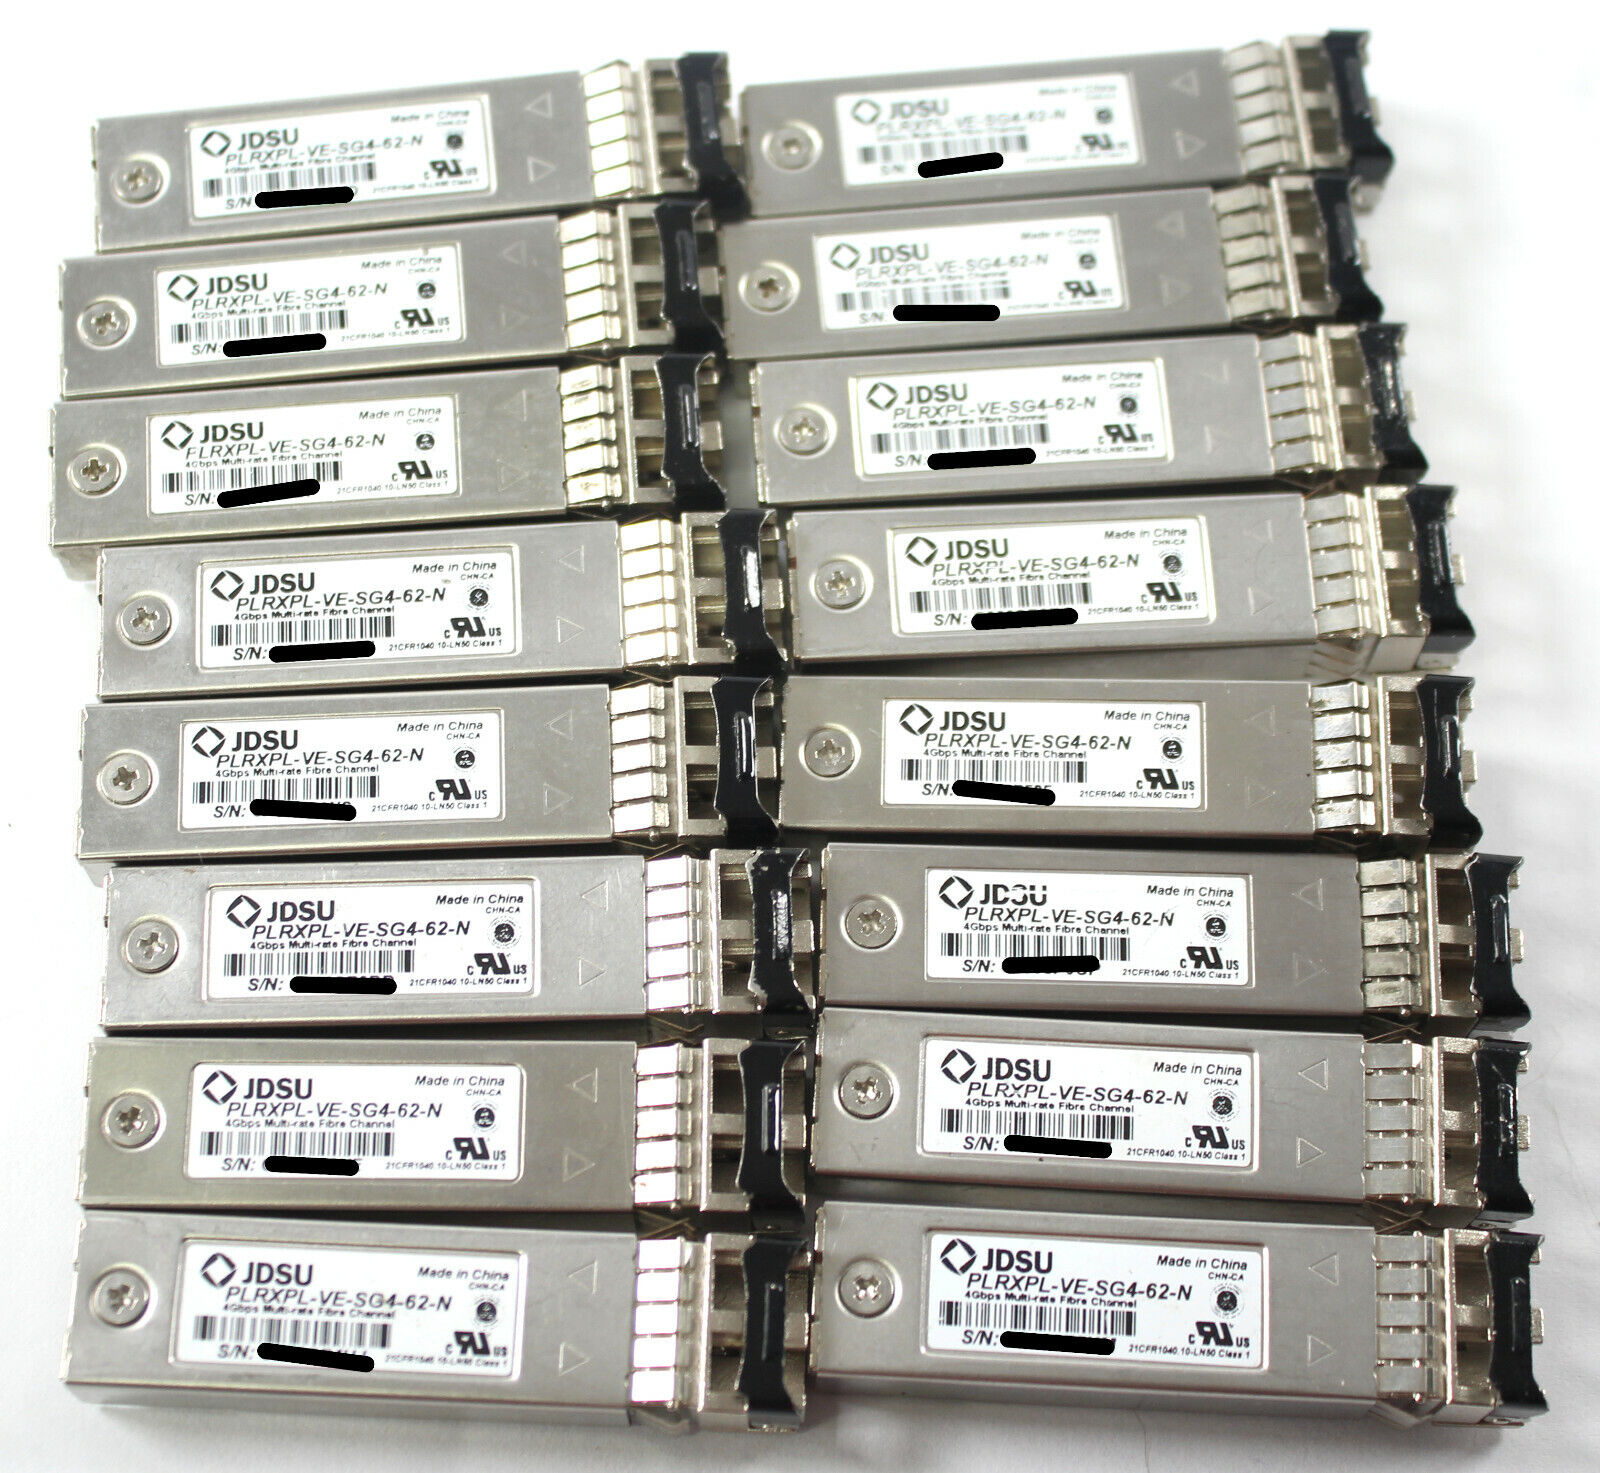 Lot of 16 JDSU PLRXPL-VE-SG4-62-N 4-Gbps Multi Rate Fibre Channel 850nm SFP Mod